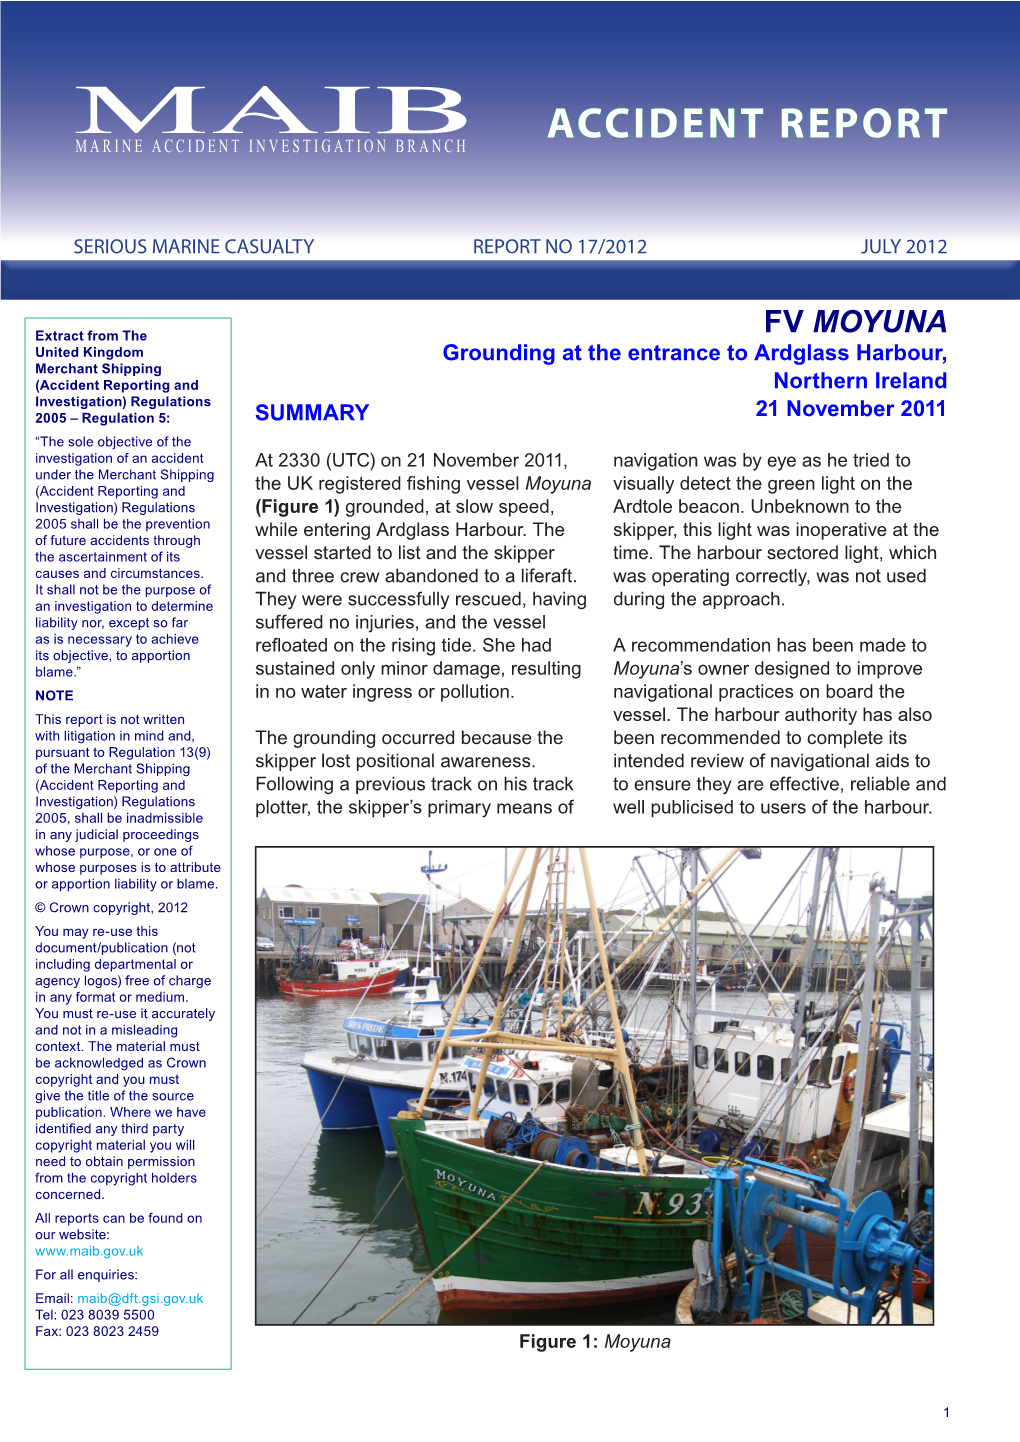 Moyuna Report No 17/2012